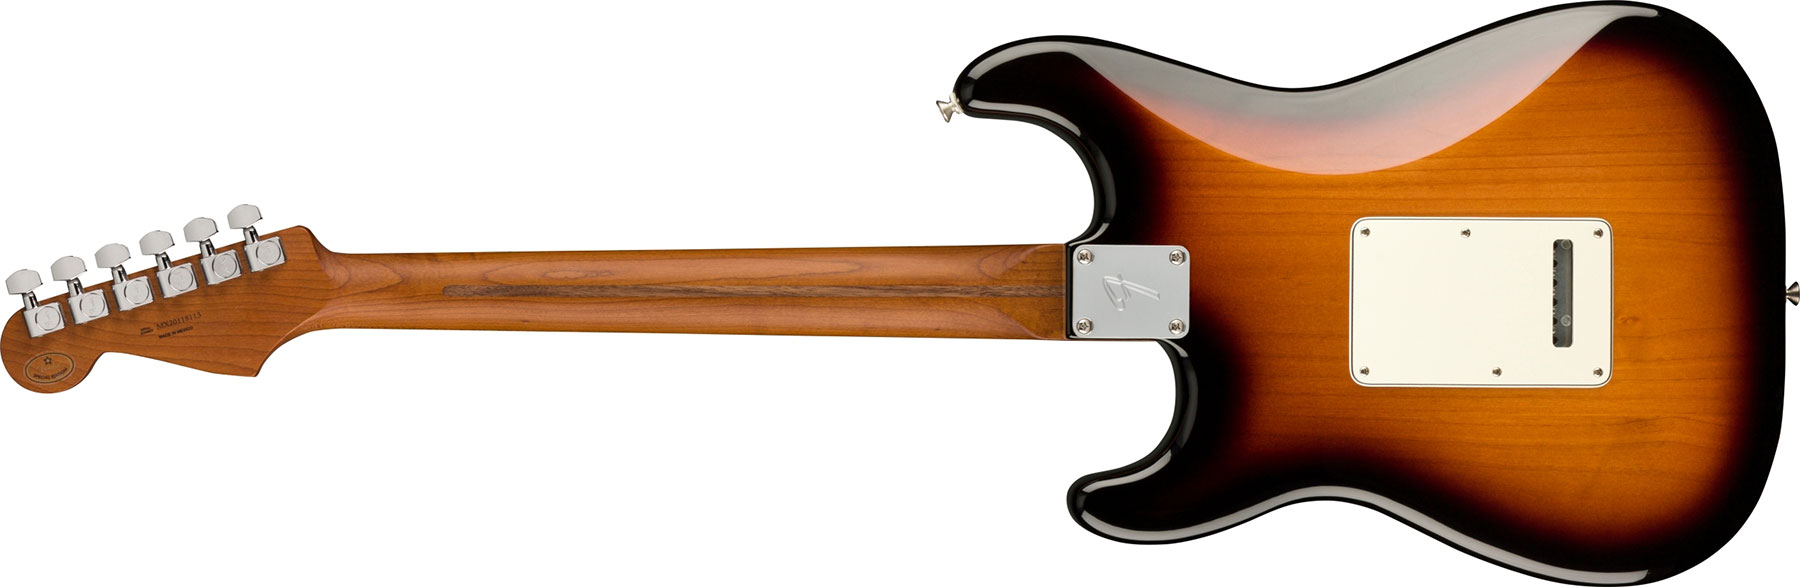 Fender Strat Player 1959 Texas Special Ltd Mex 3s Mn +housse X-tone 2015 Ele-bk - 2-color Sunburst - Electric guitar set - Variation 1